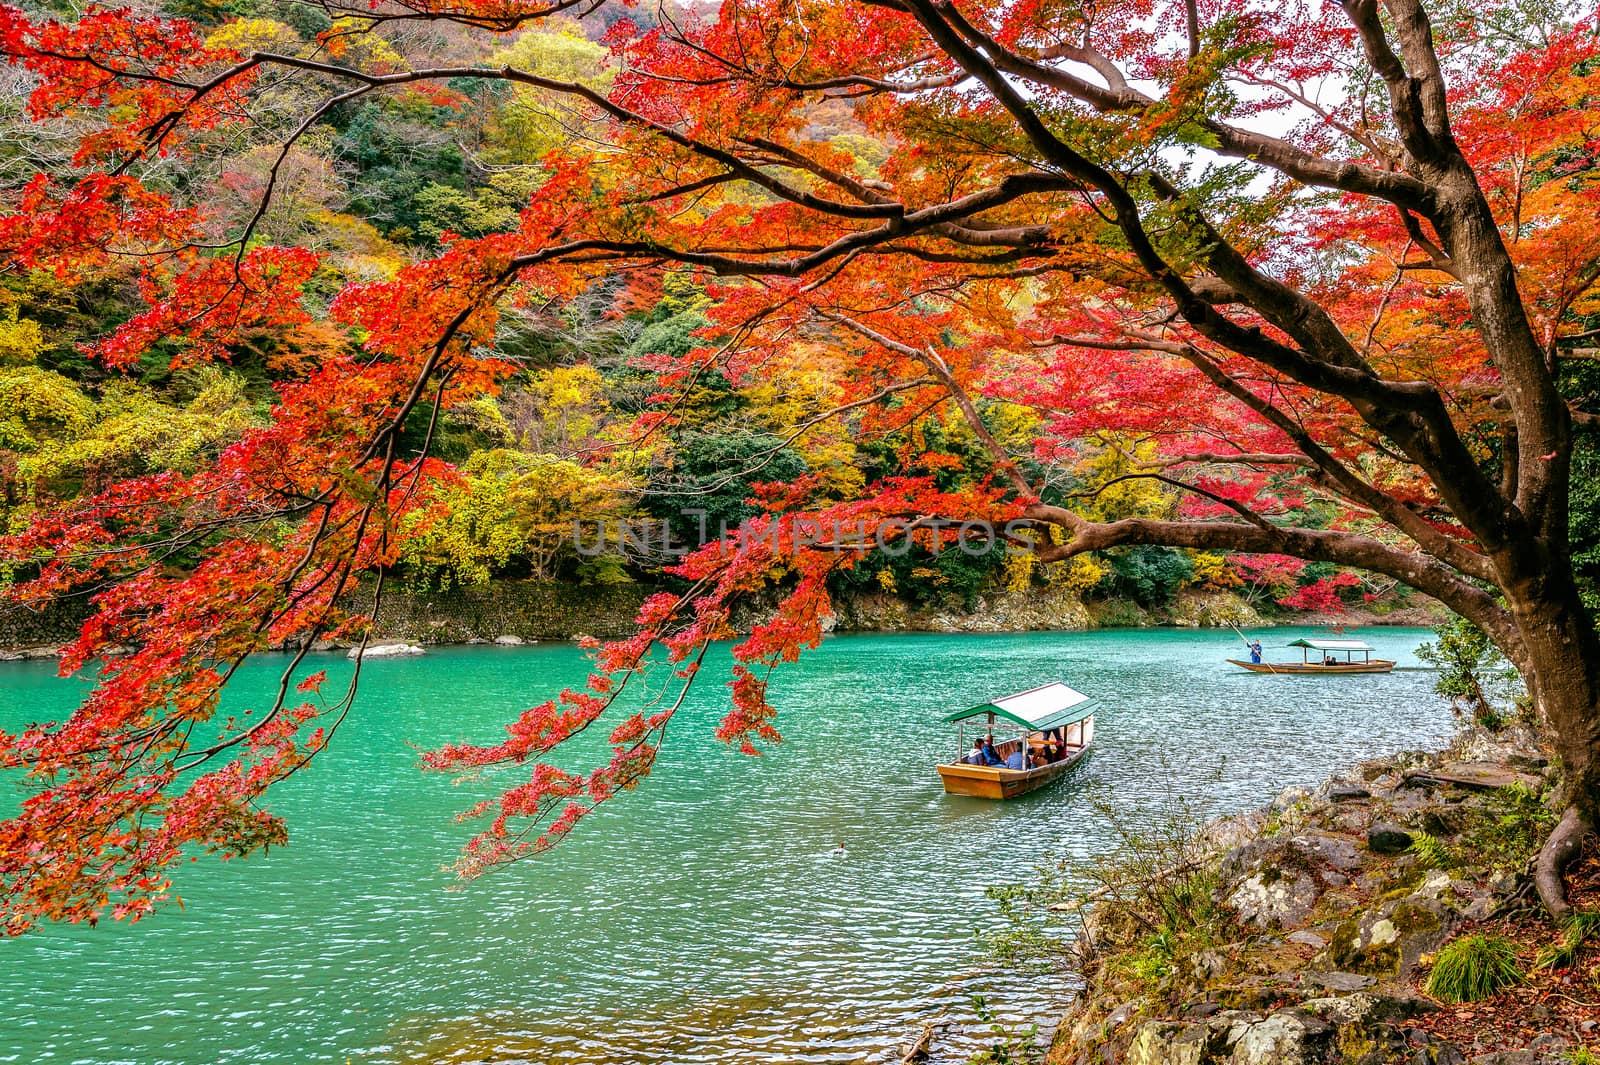 Boatman punting the boat at river. Arashiyama in autumn season along the river in Kyoto, Japan. by gutarphotoghaphy